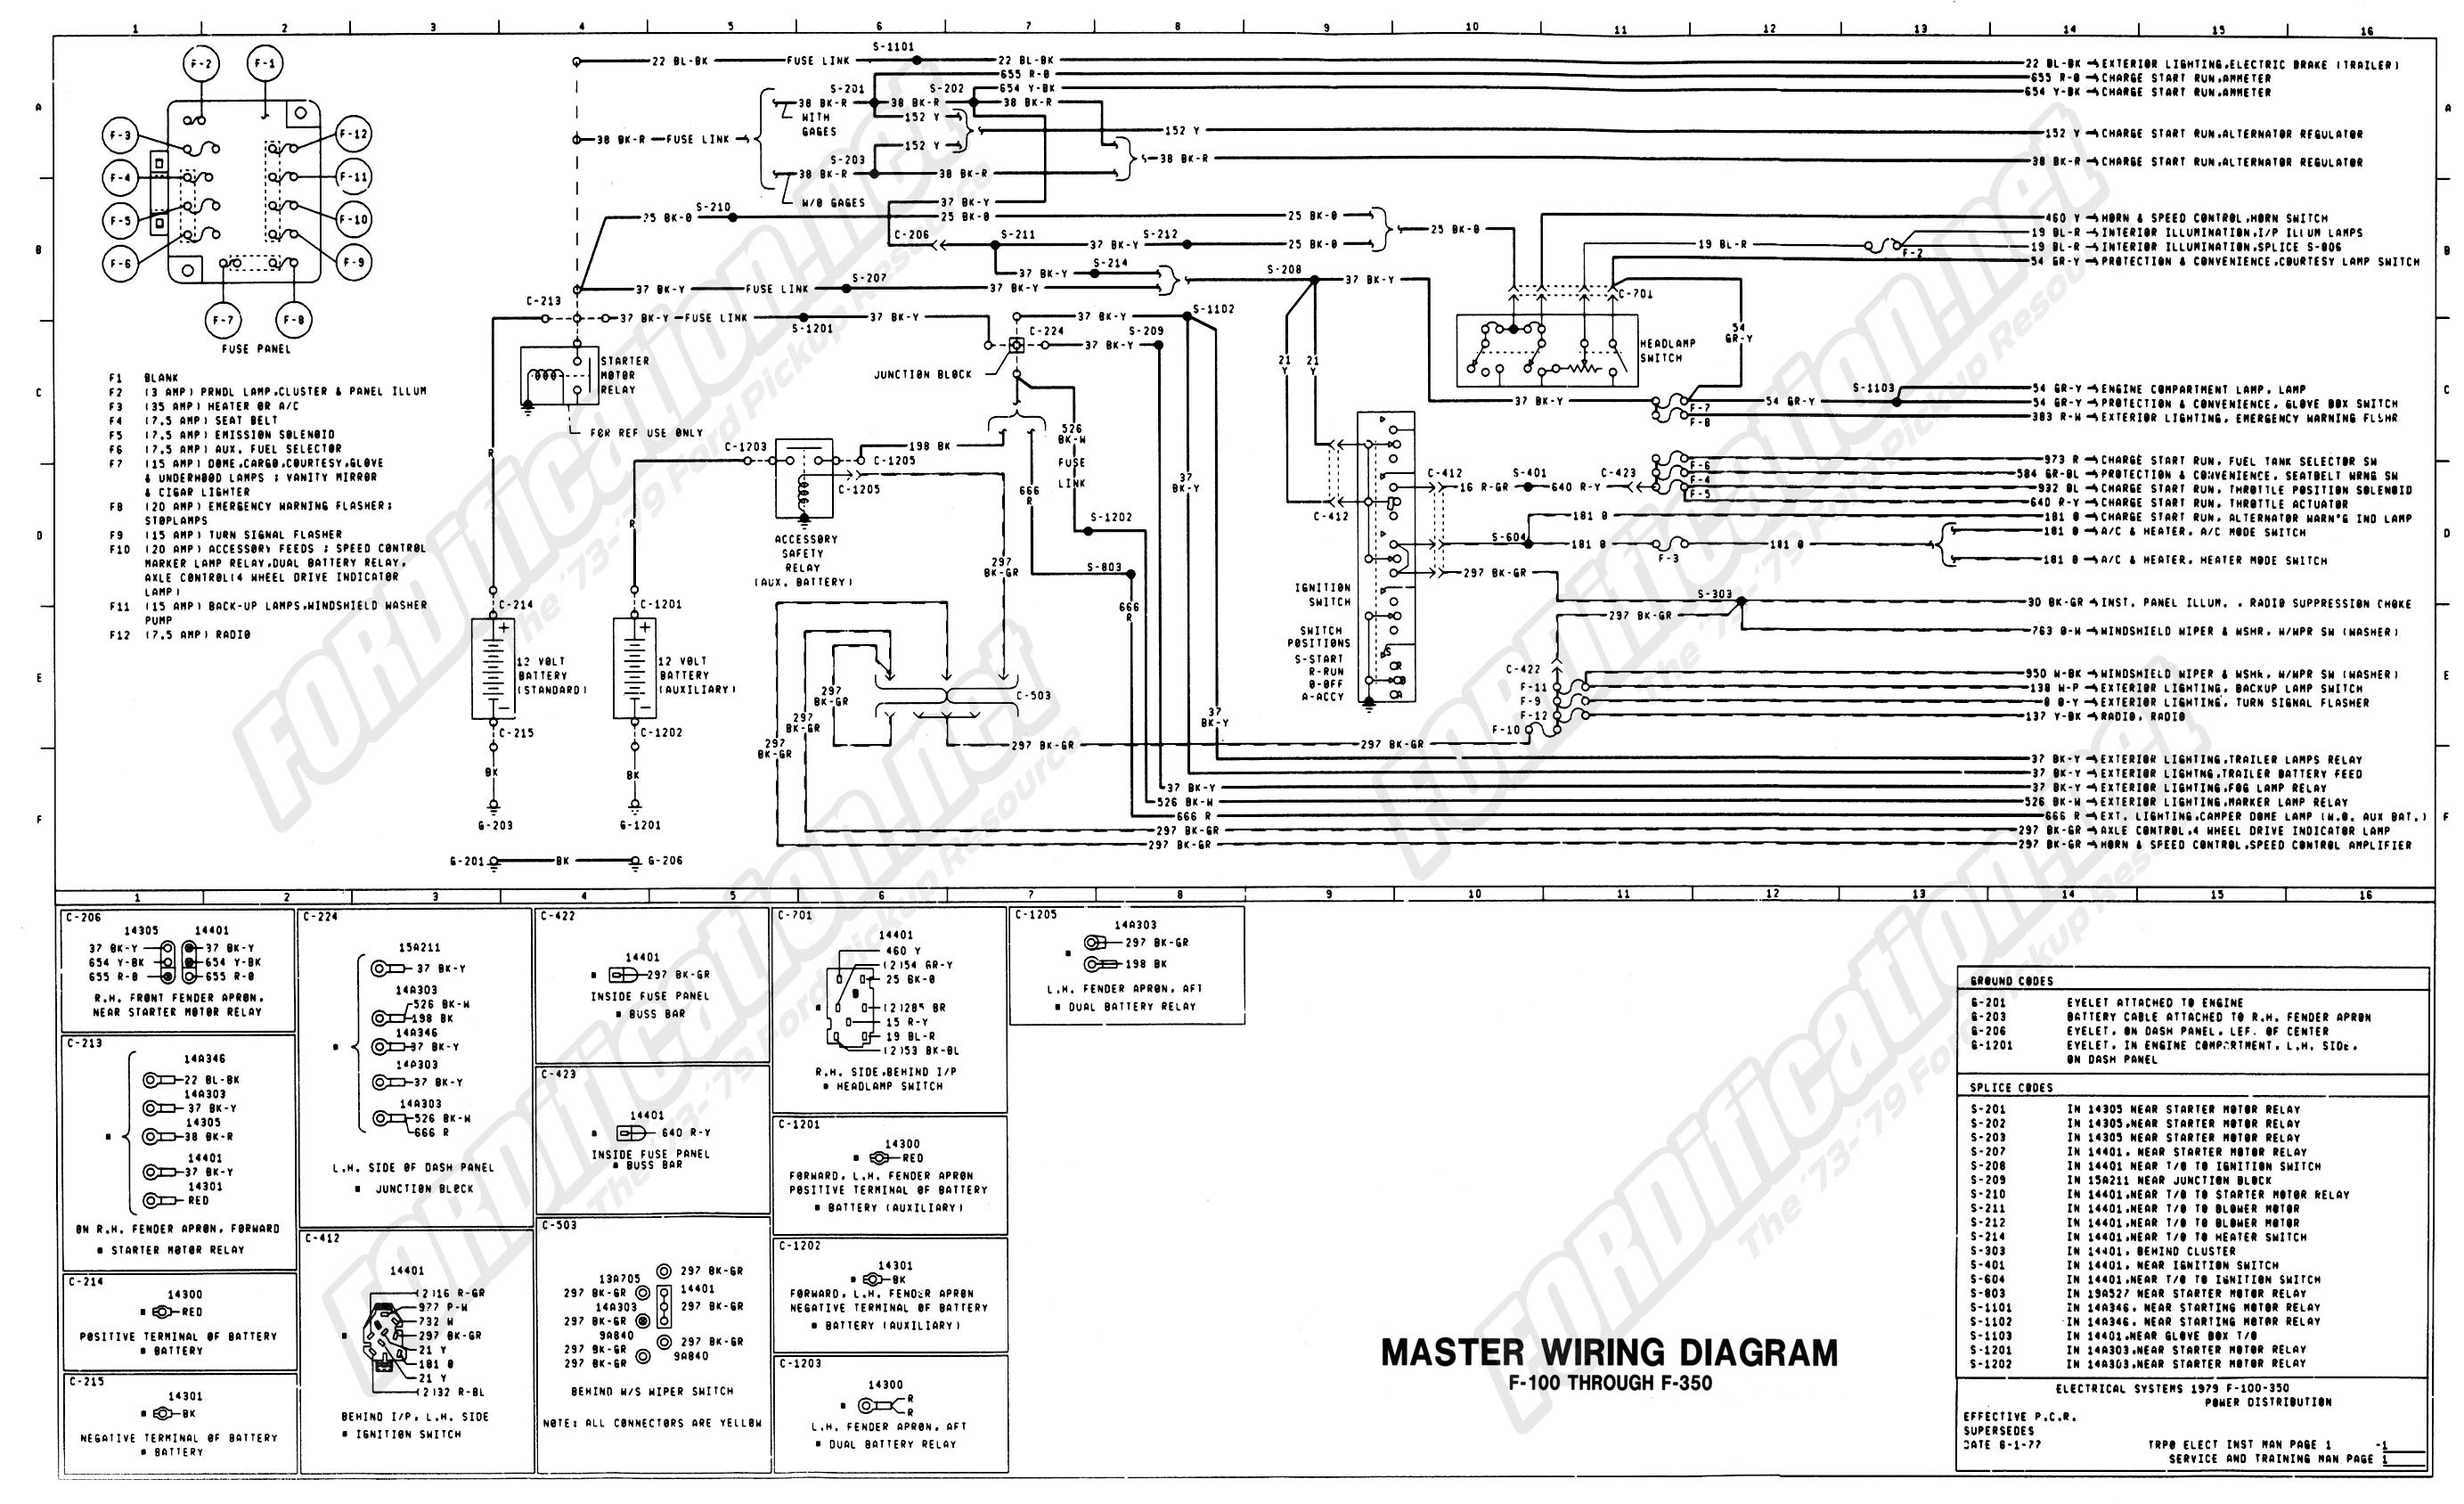 Wiring Diagram 2011 F250 1979 F100 Ignition Switch Wiring Diagram Positions ford Of Wiring Diagram 2011 F250